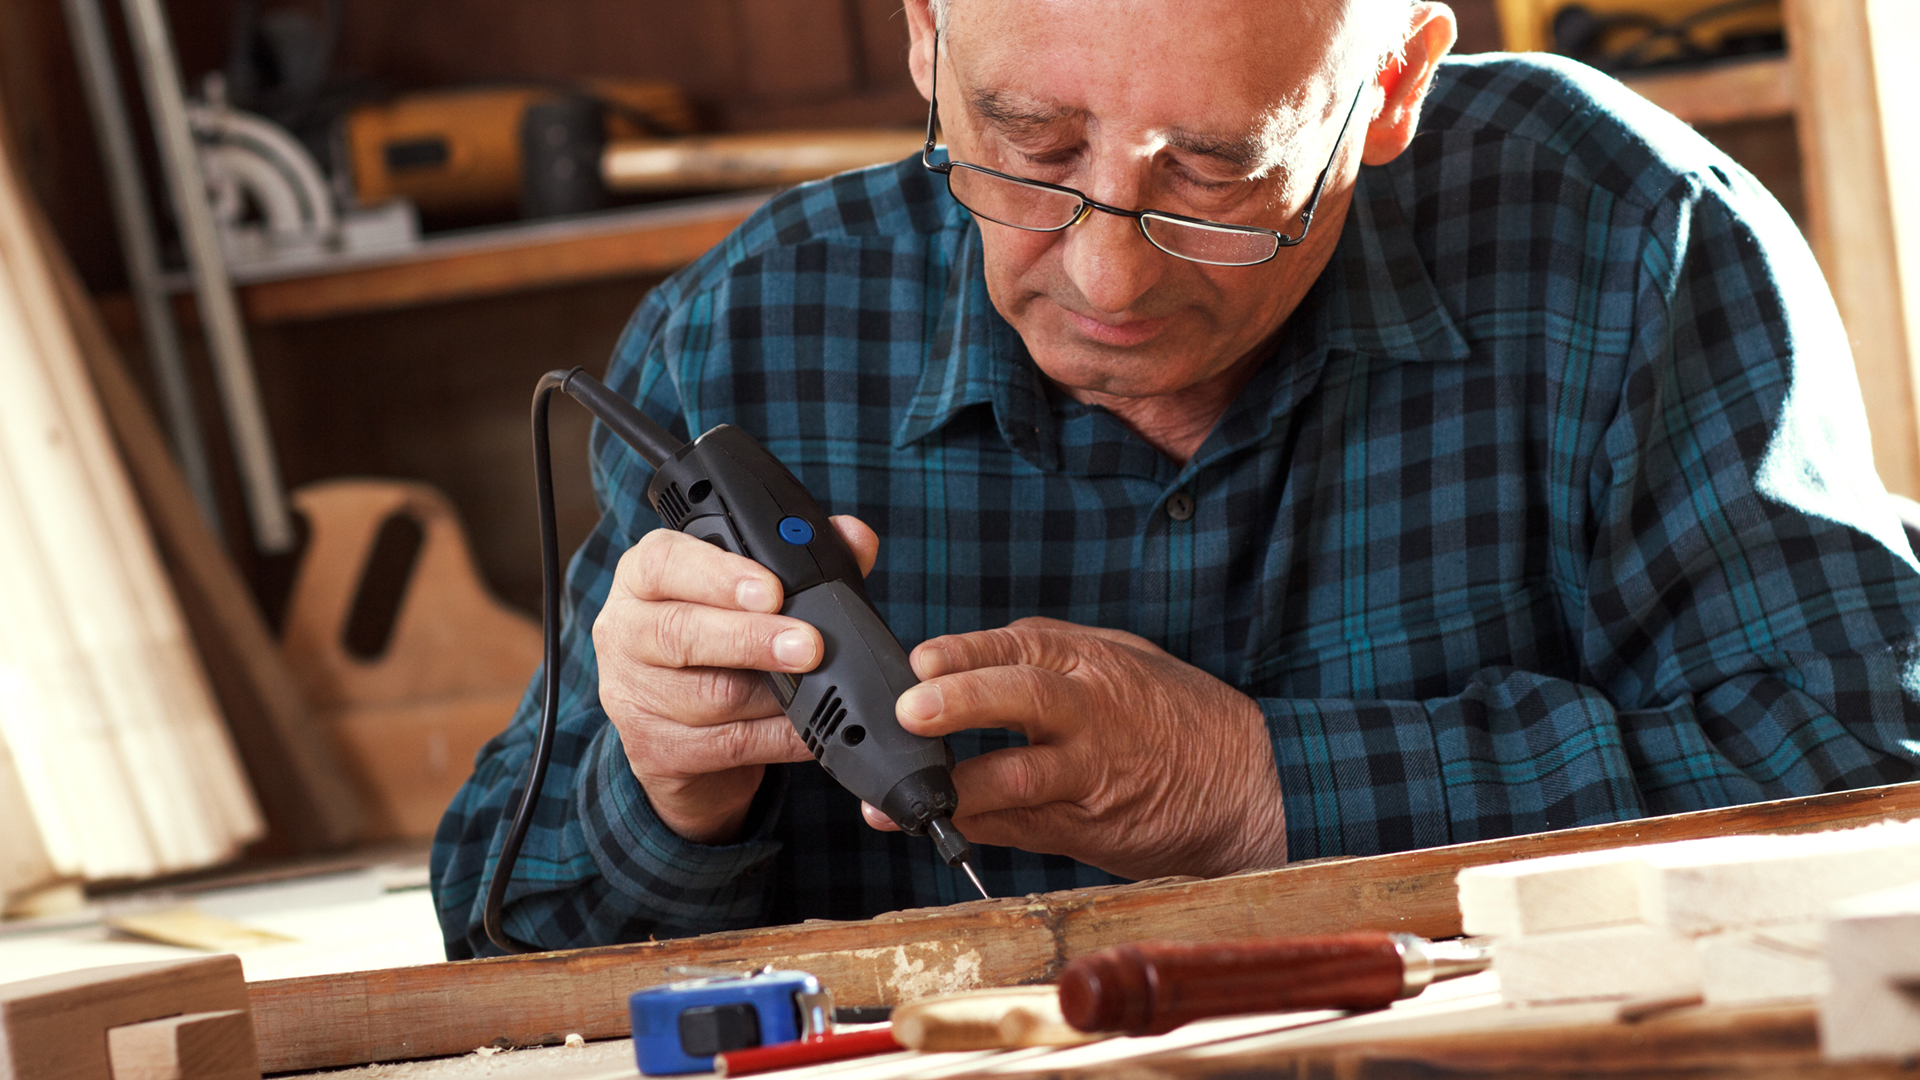 Senior carpenter carving wood with engraver tool. Restoring old furniture.